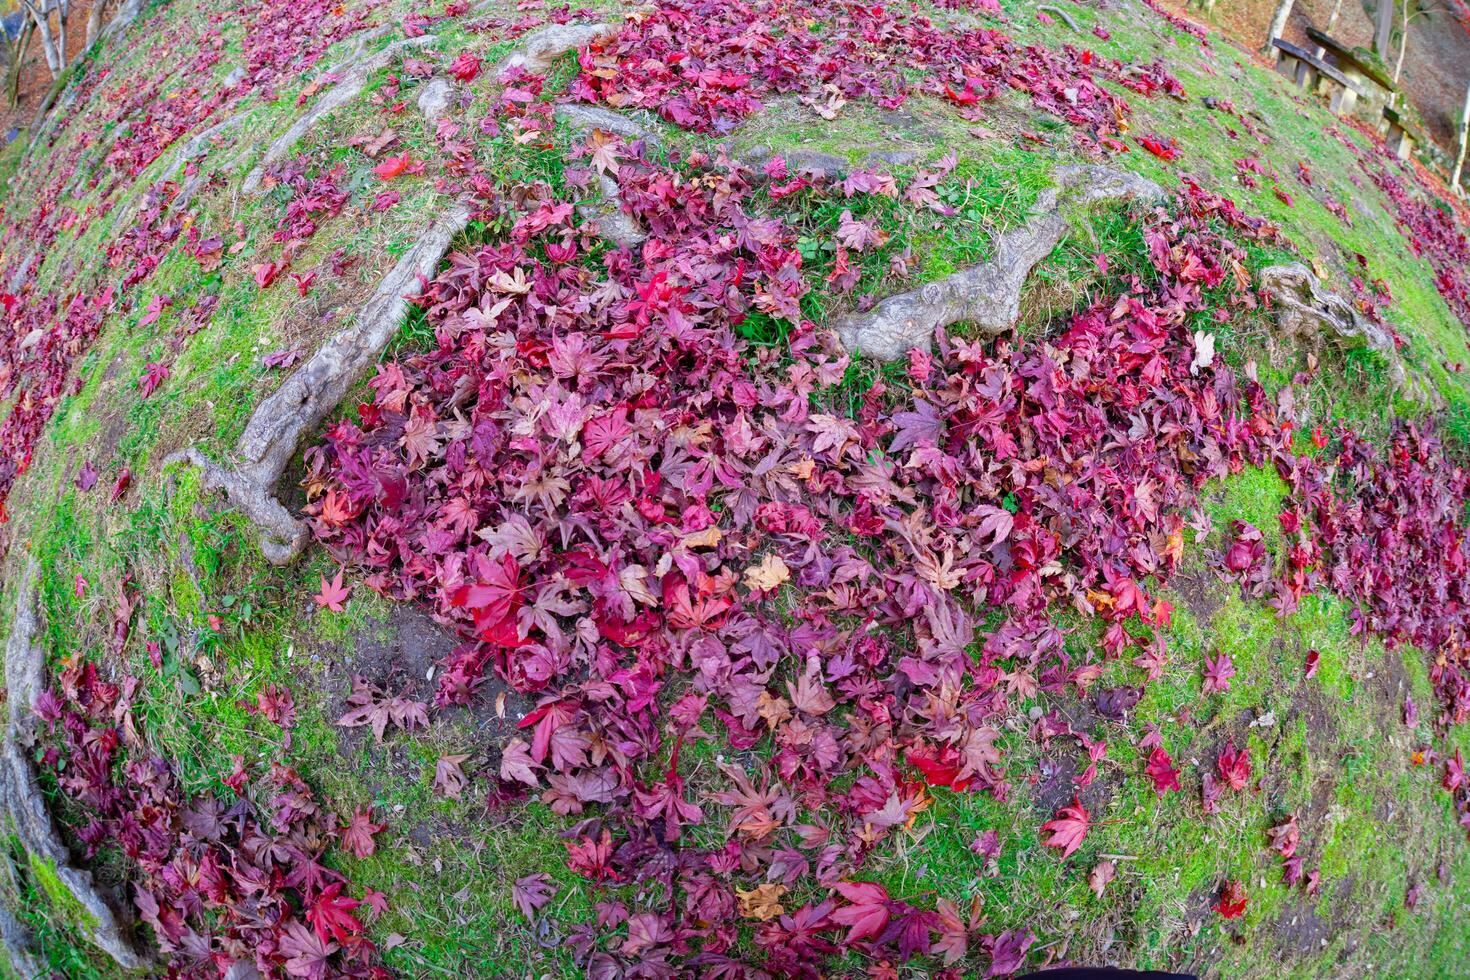 rojo hojas a kasagiyama Momiji parque en Kioto en otoño pescado ojo Disparo foto